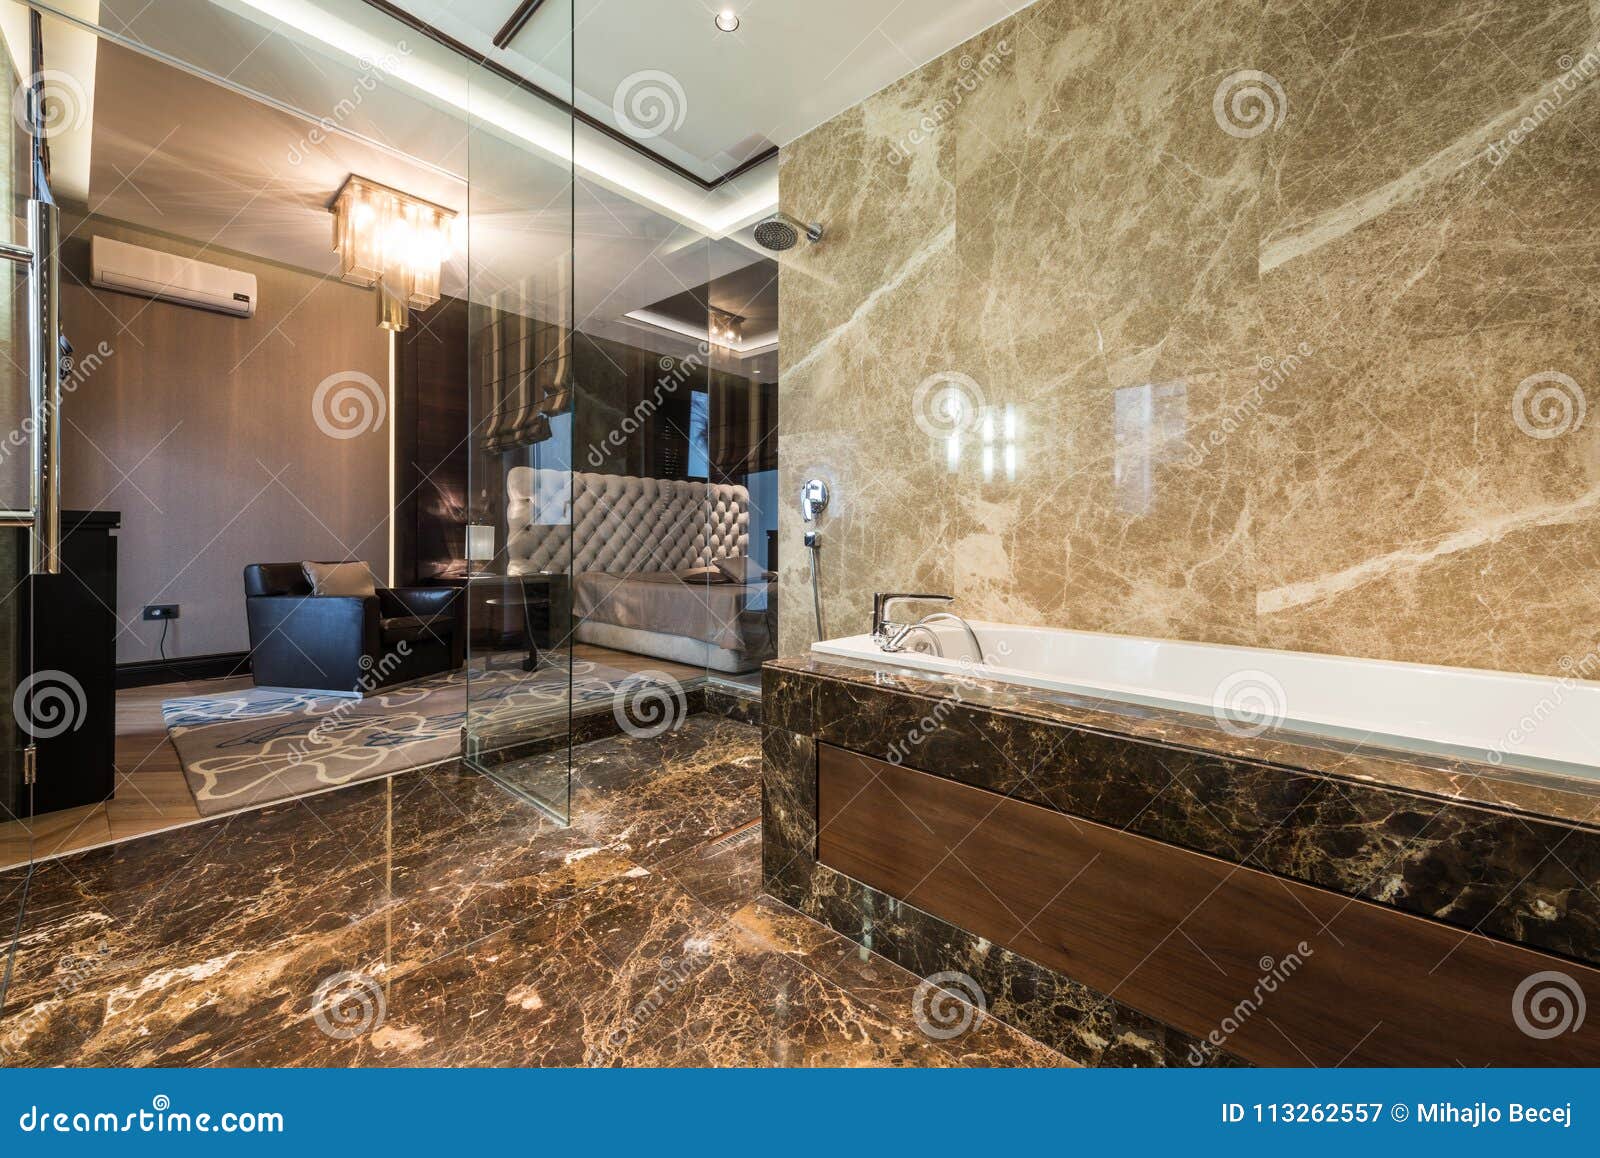 Master Bedroom Interior with Luxury Bathroom Stock Image - Image of ...